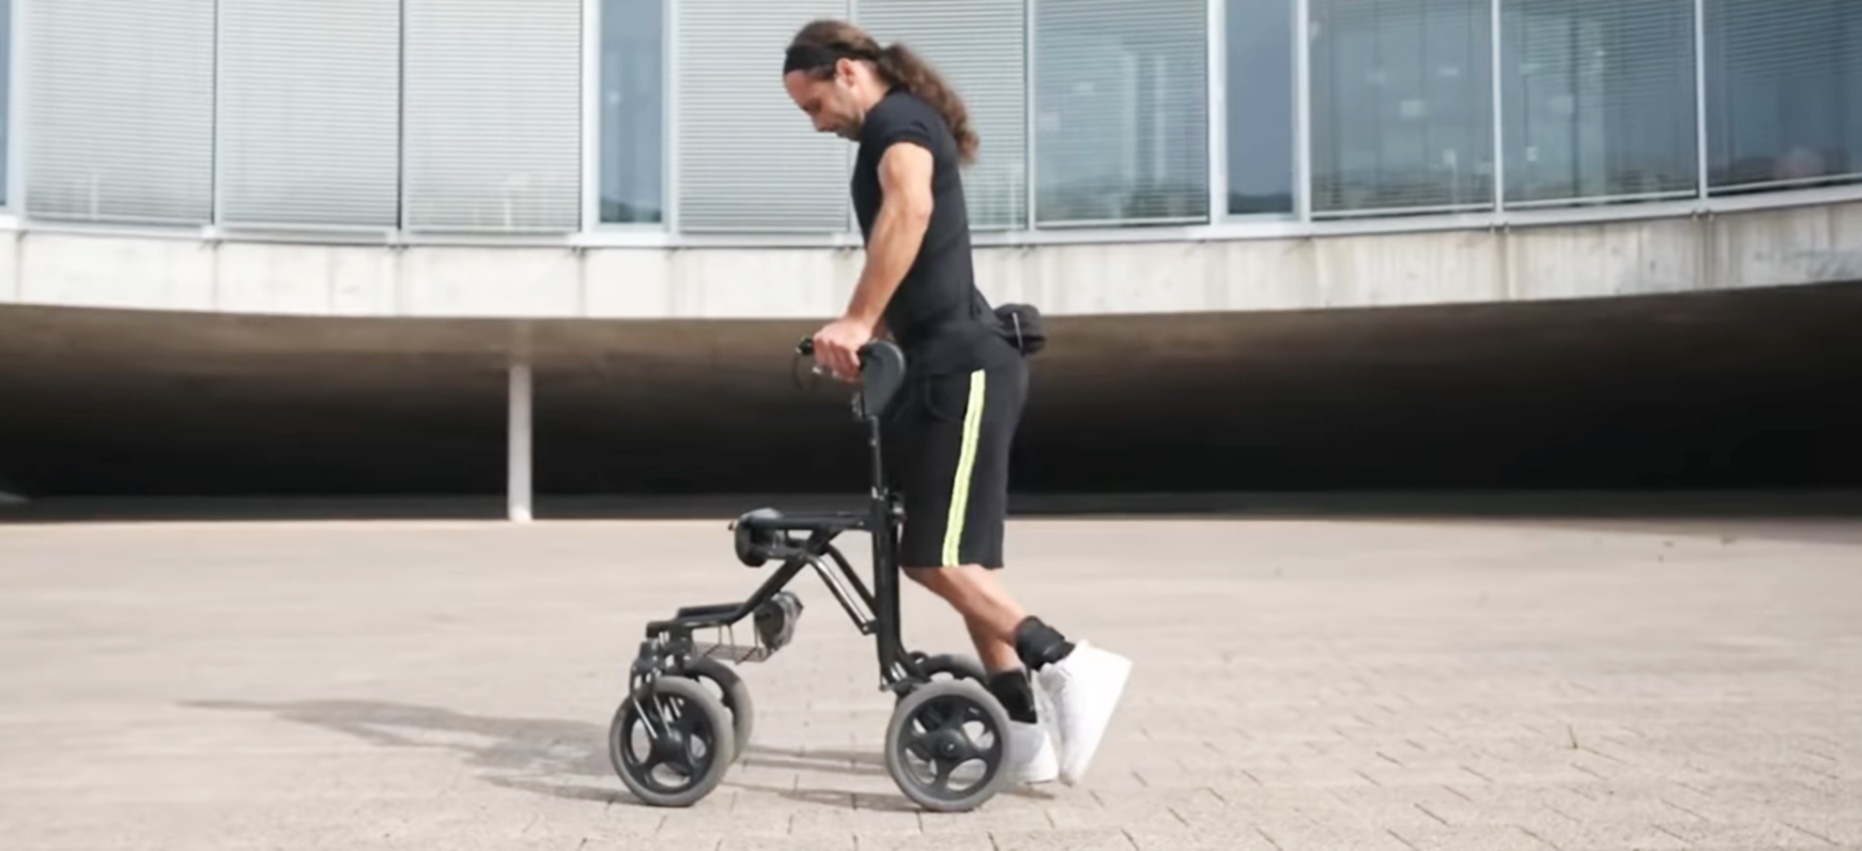 Pacientes con paraplejía vuelven a caminar con terapias de estímulo eléctrico